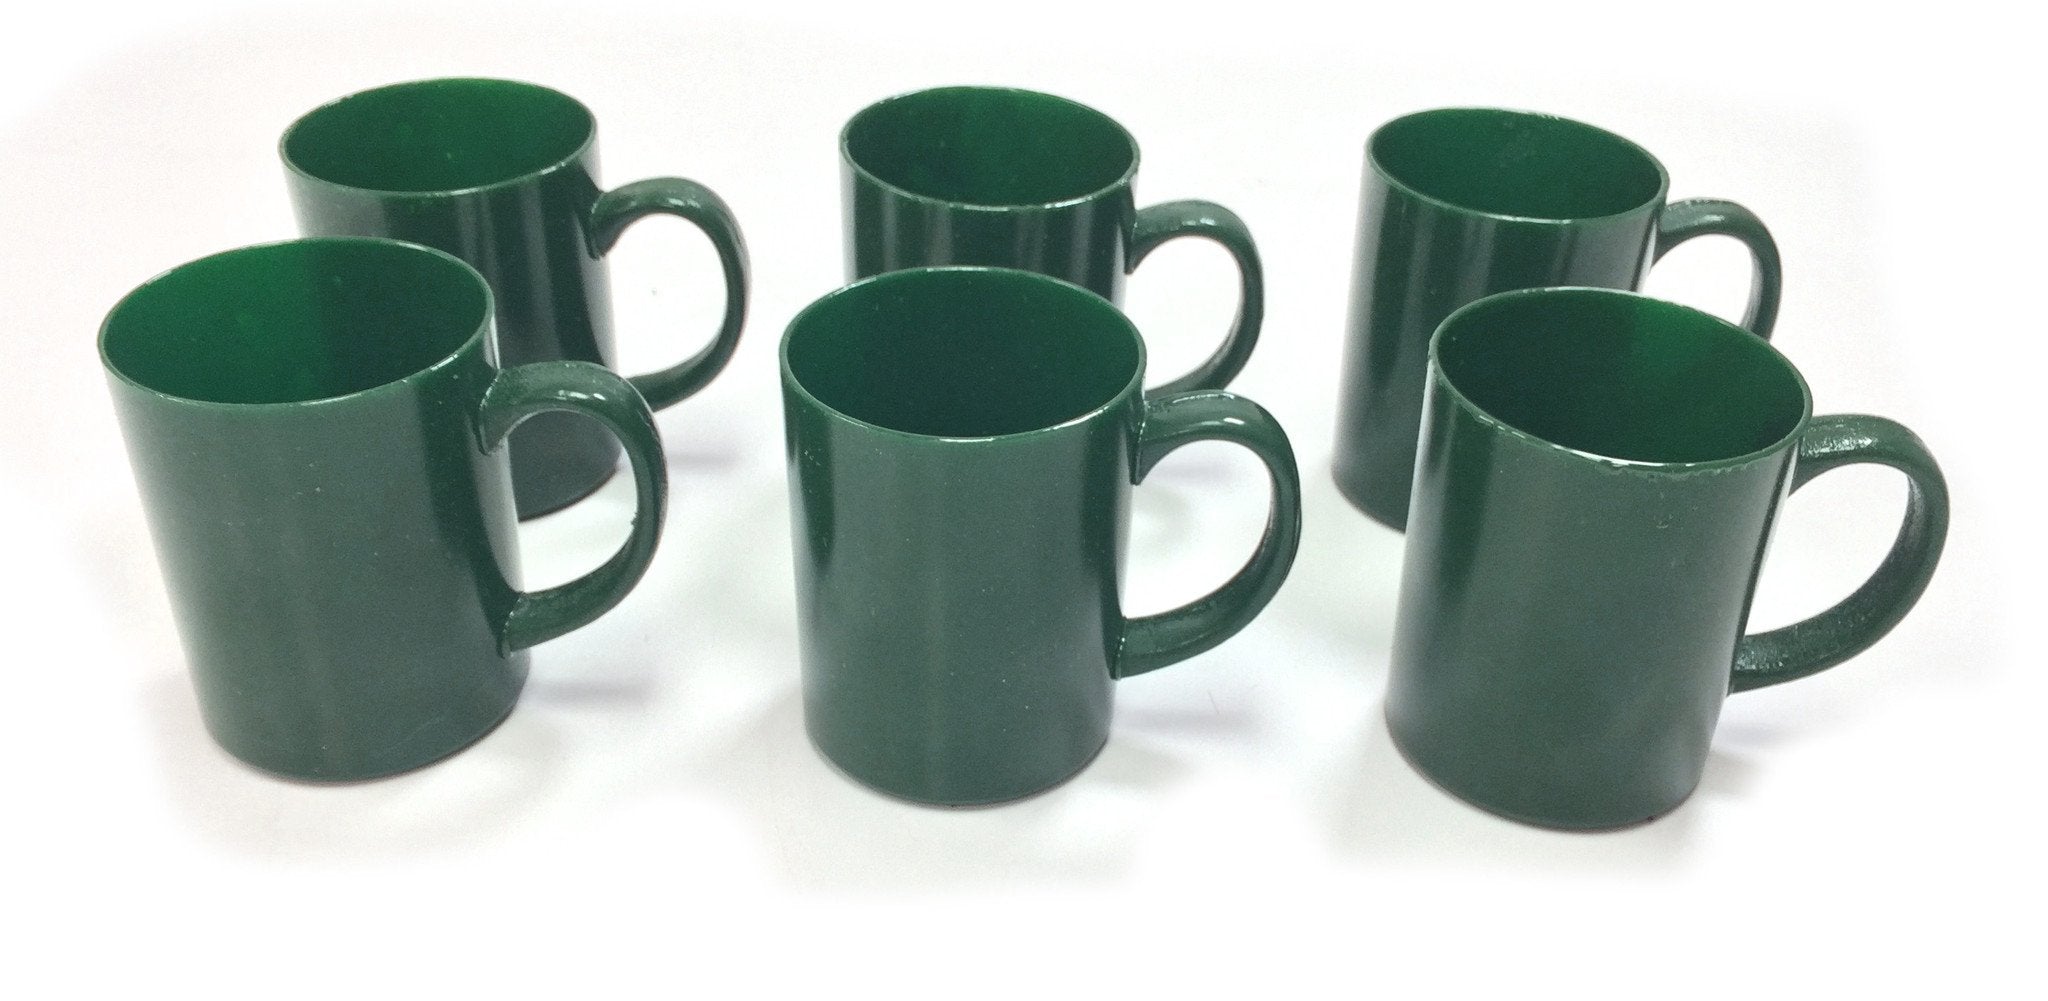 SMASHProps Breakaway Green Coffee Mug - 6 PIECE - DARK GREEN opaque